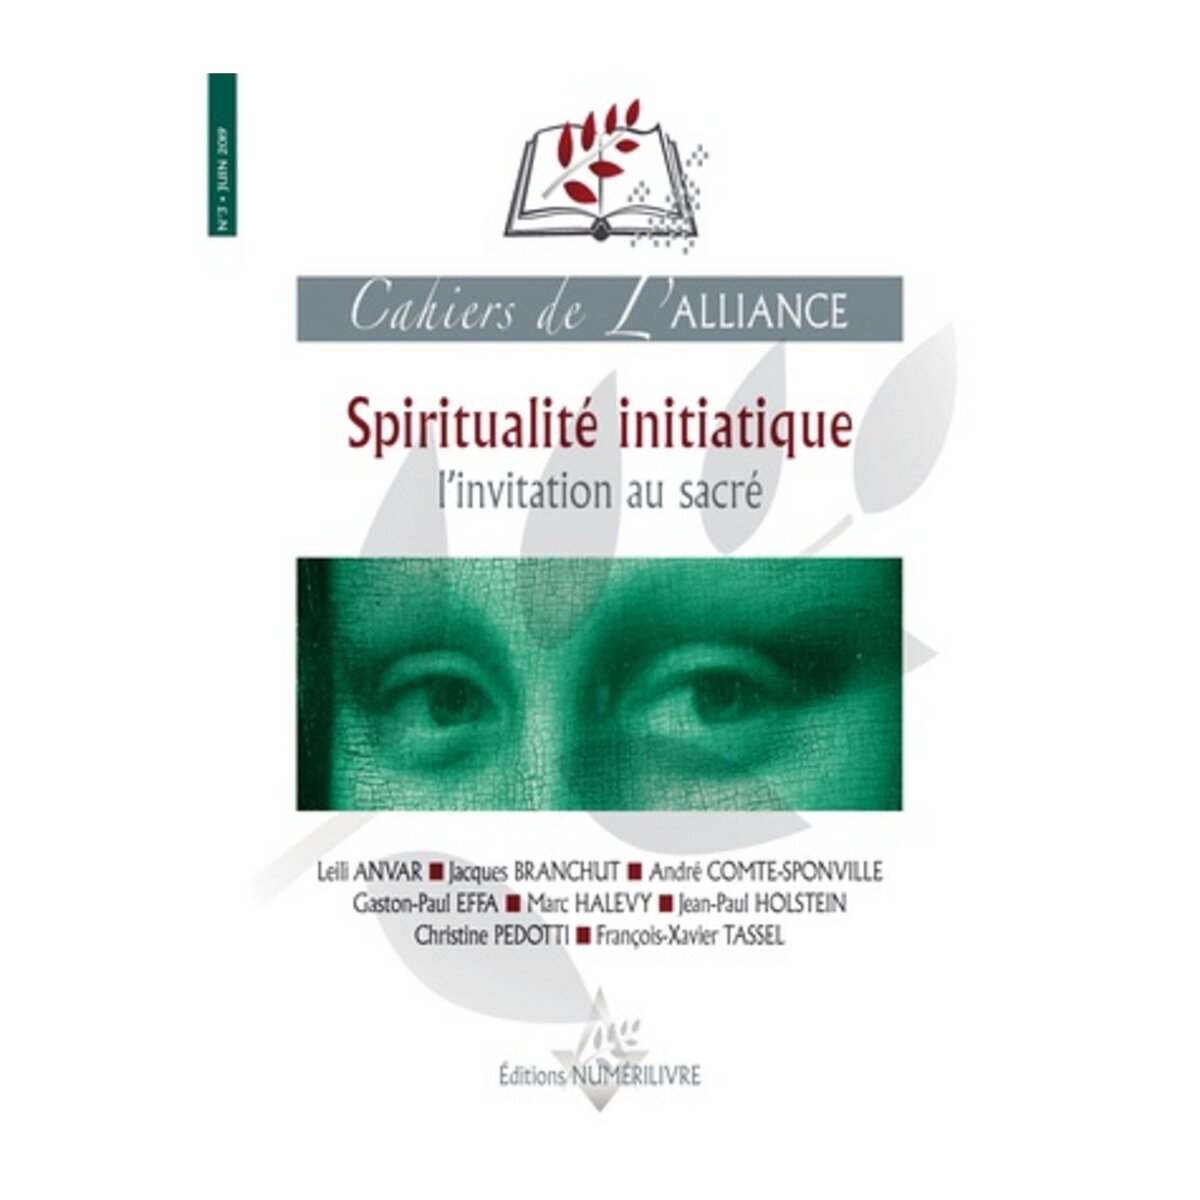  CAHIERS DE L'ALLIANCE N° 3 : SPIRITUALITE INITIATIQUE, Anvar Leili